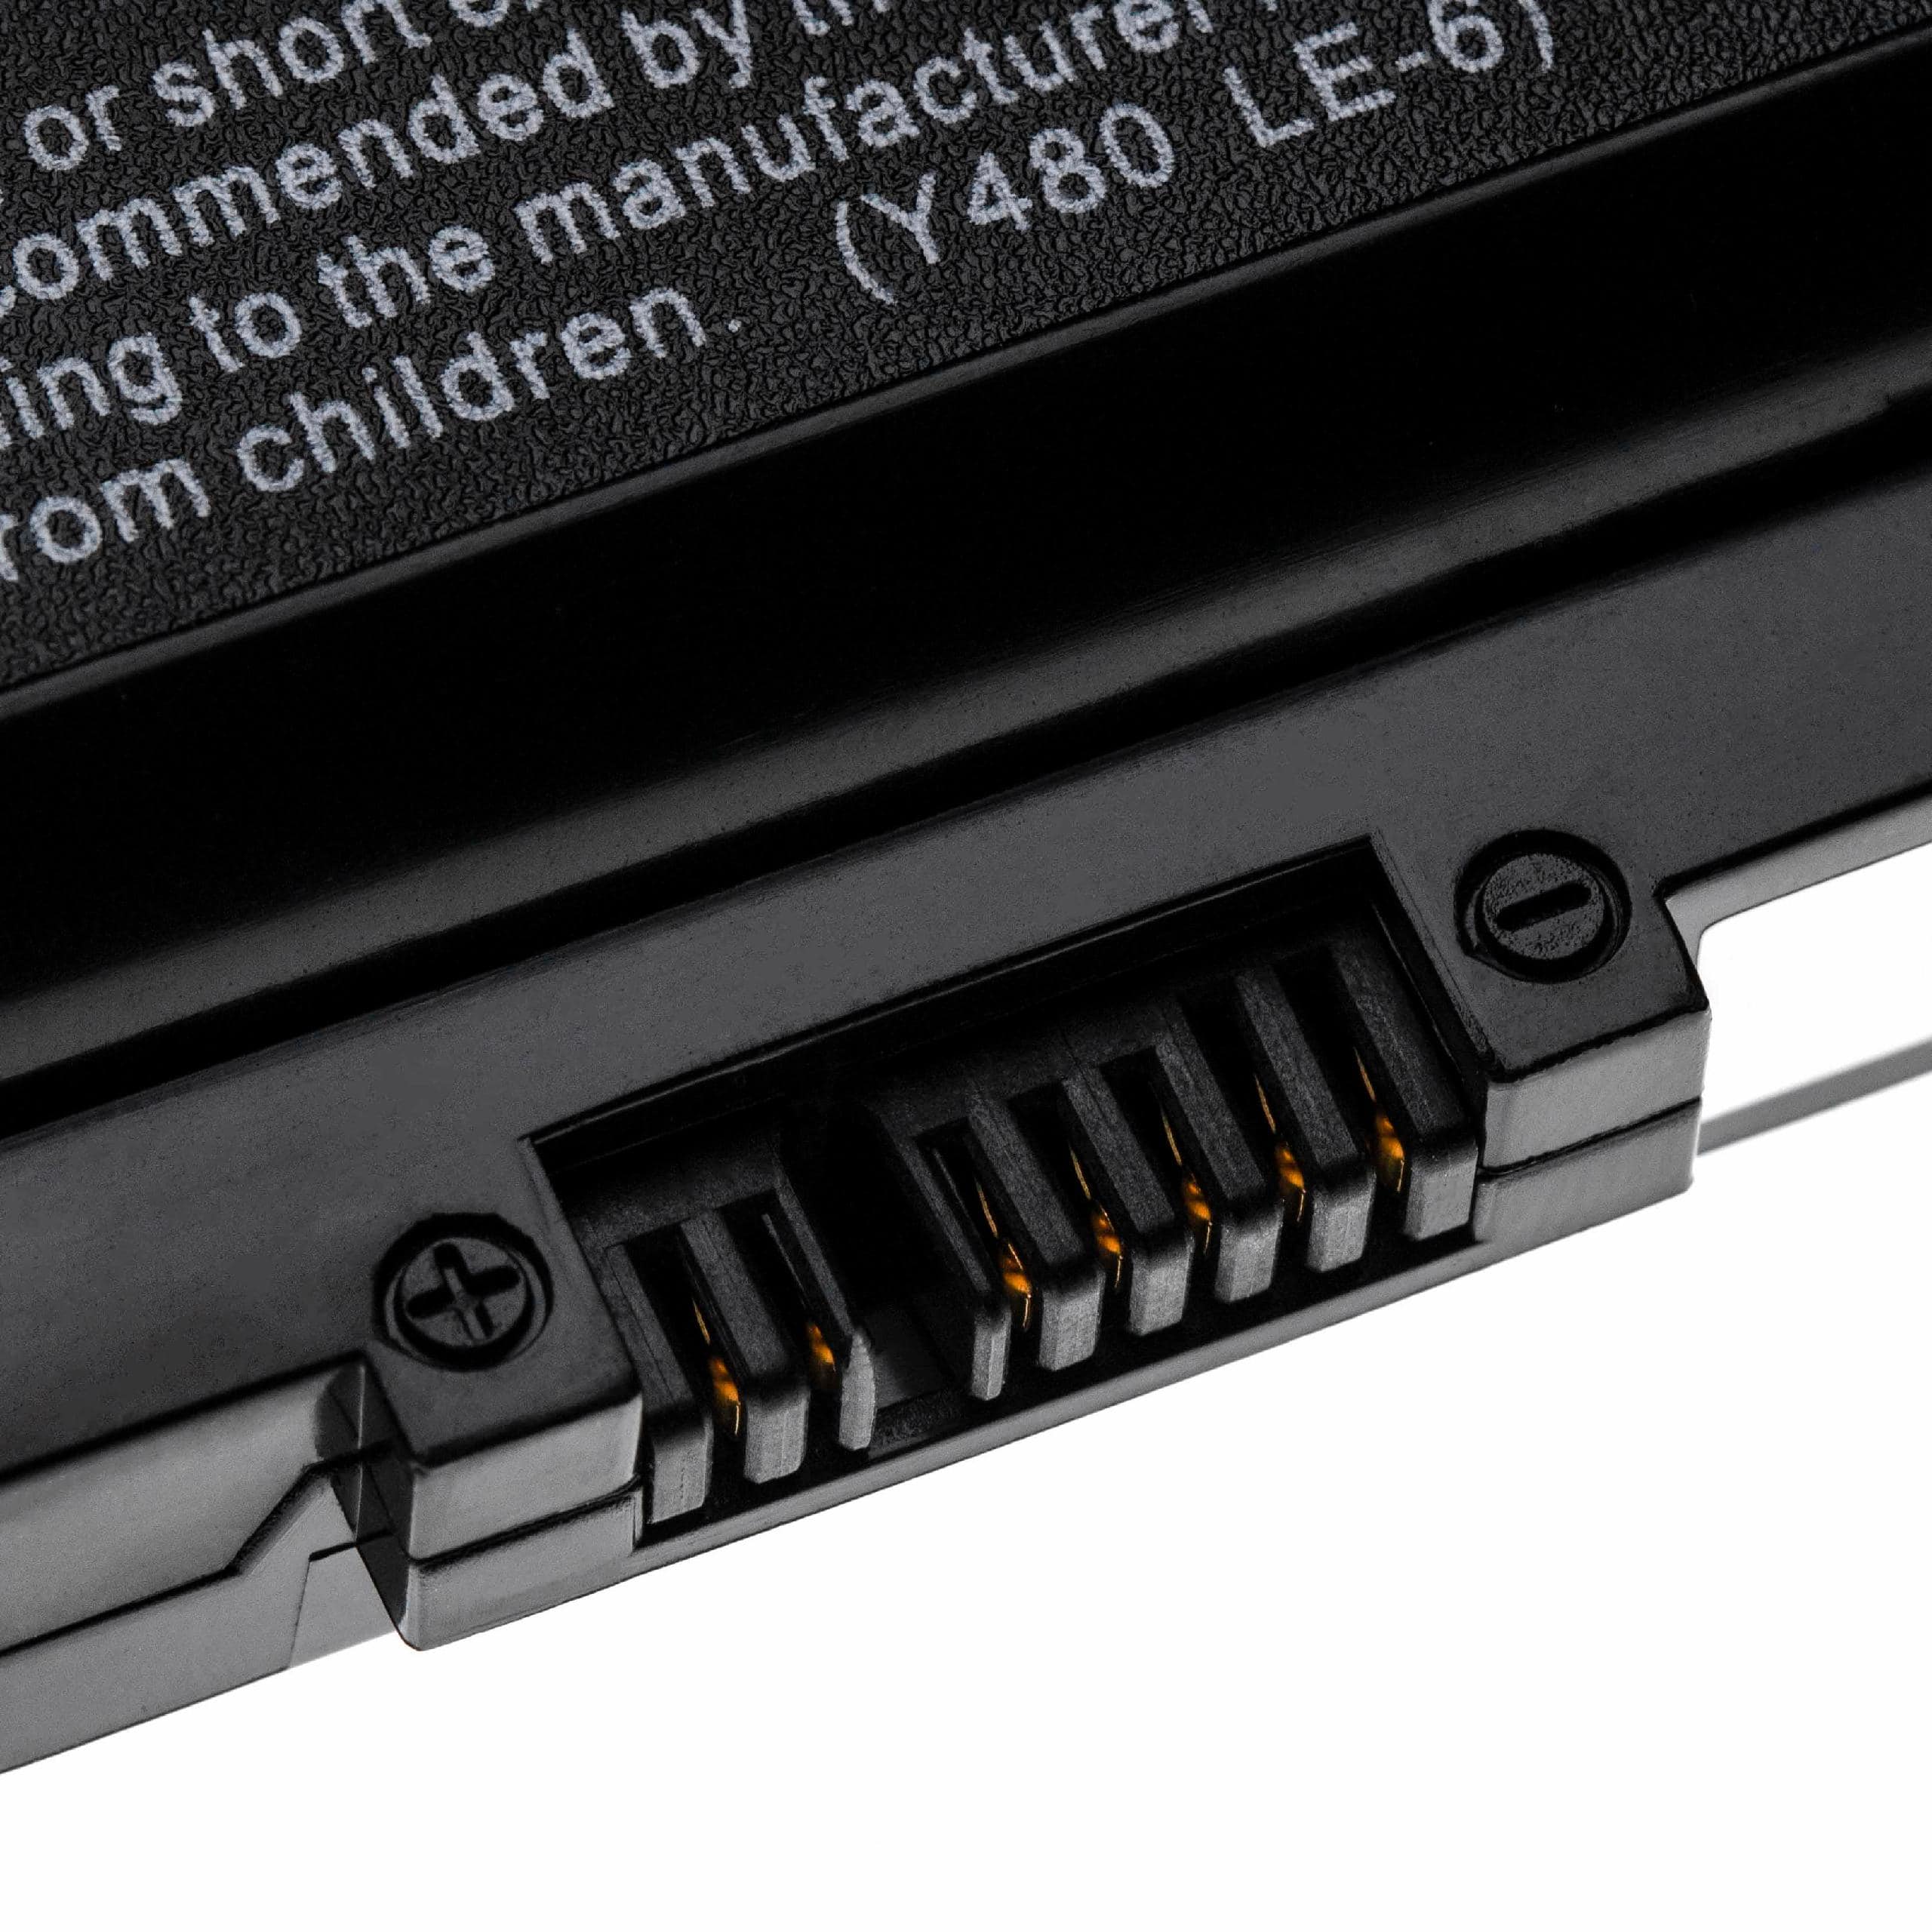 Akumulator do laptopa zamiennik Lenovo 0A36311, 121000675, 121500047 - 5200 mAh 11,1 V Li-Ion, czarny